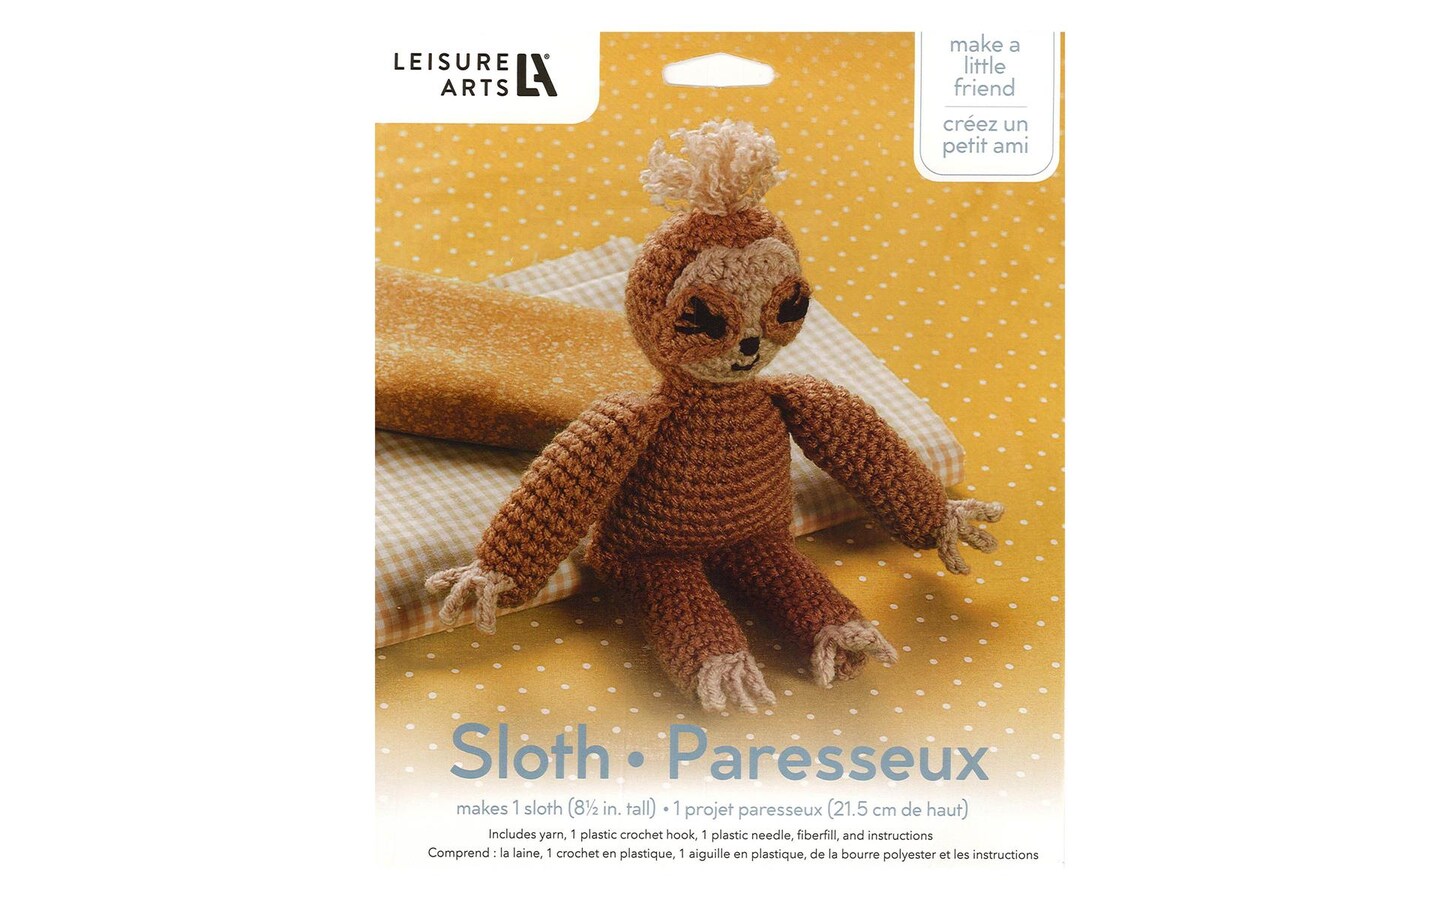 Leisure Arts Little Crochet Friend Animals Crochet Kit, Bunny, 8, Complete Crochet  kit, Learn to Crochet Animal Starter kit for All Ages, Includes  Instructions, DIY amigurumi Crochet Kits